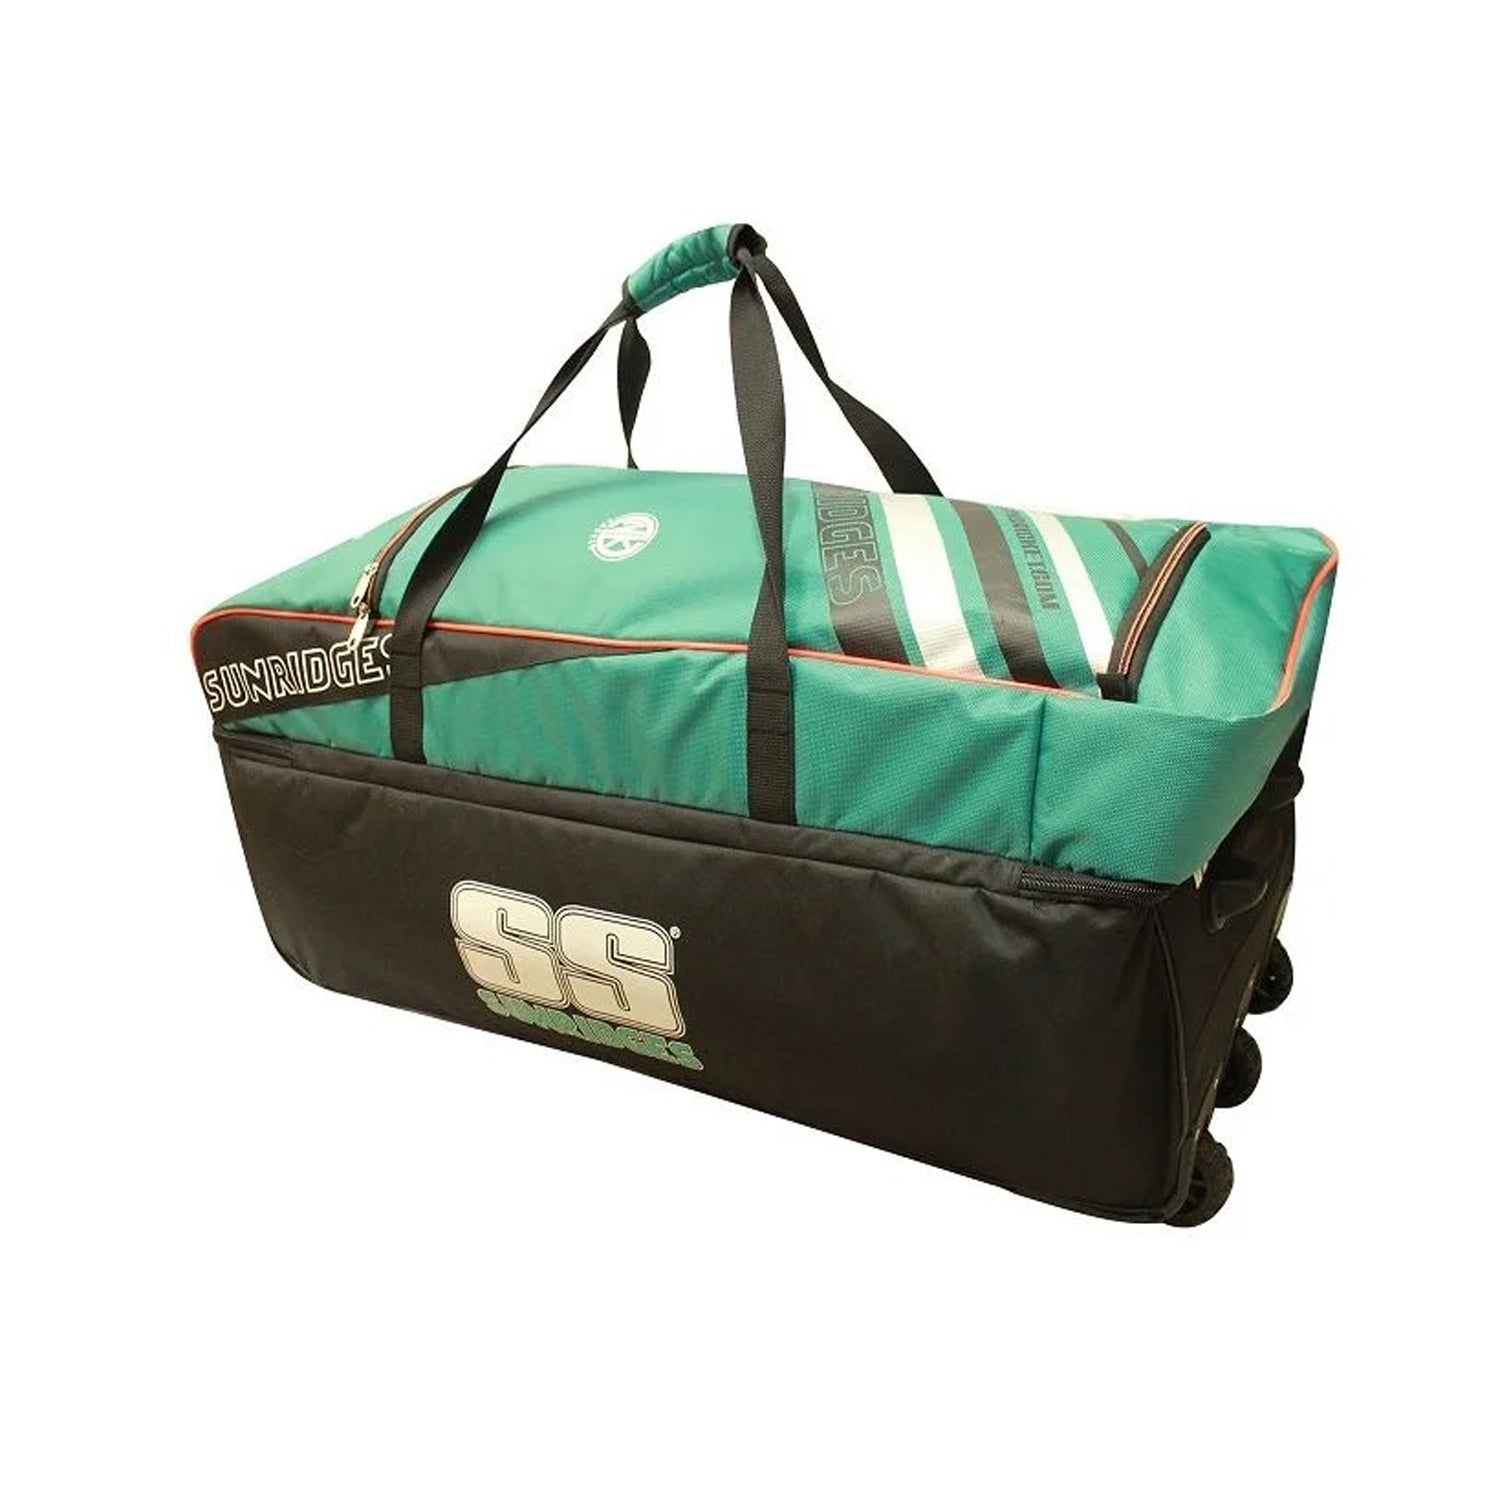 SS Master 9000 Wheels Cricket Kit Bag - Best Price online Prokicksports.com